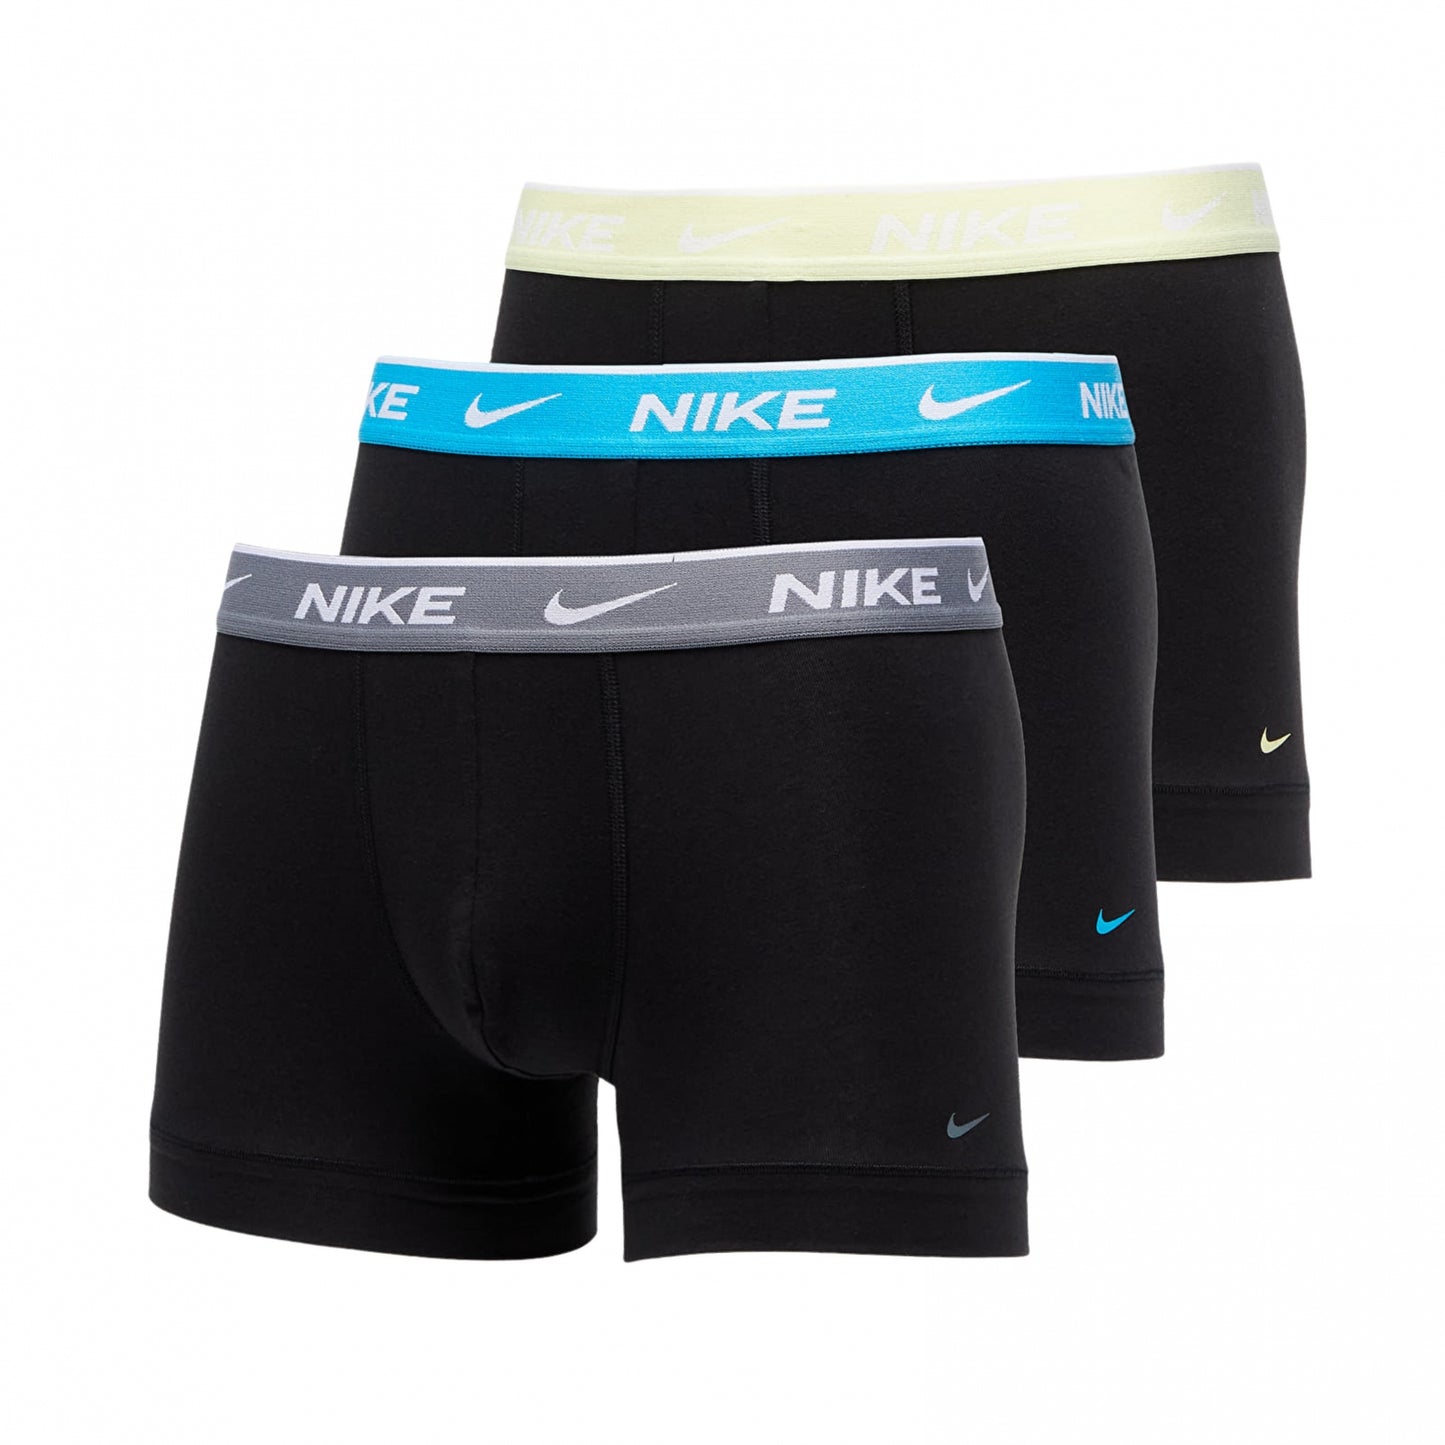 Boxer pant Nike Trunk Underwear 3 Pack